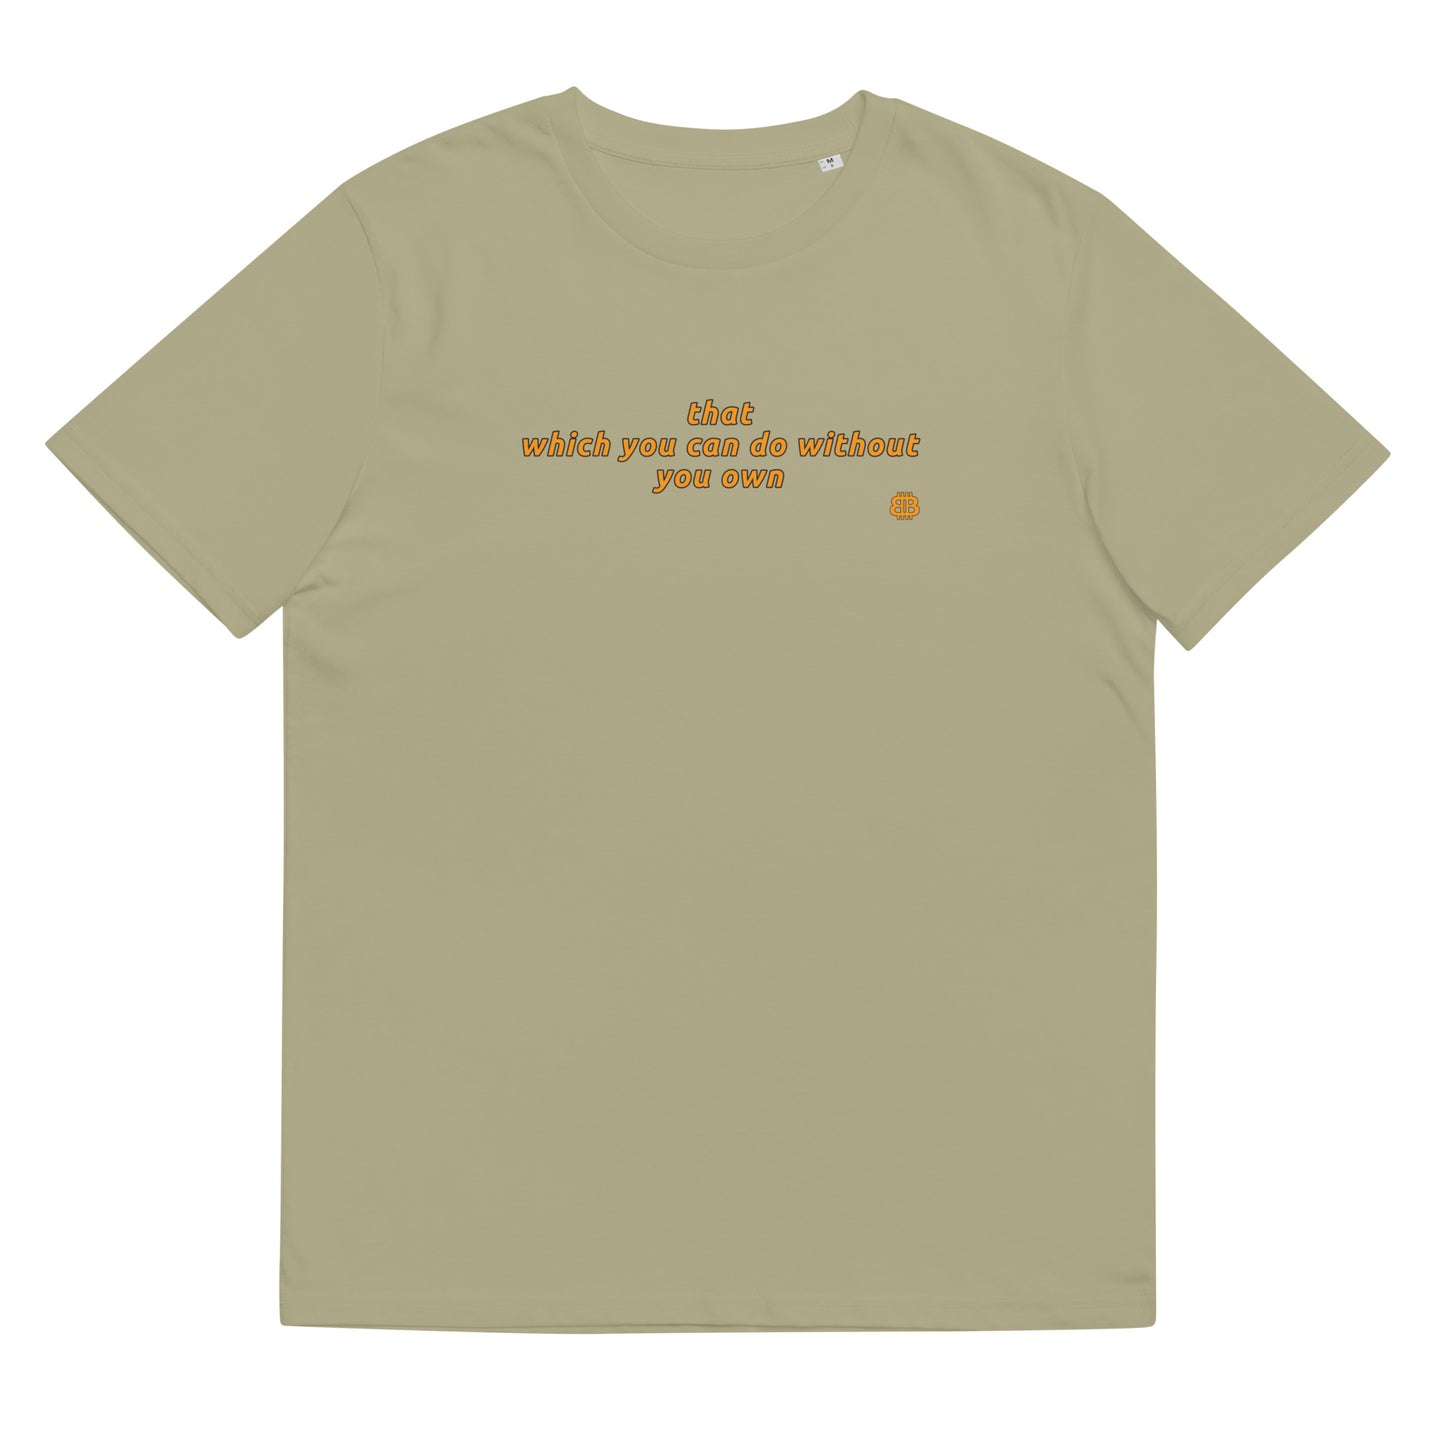 Camiseta unisex de algodón orgánico "Own"